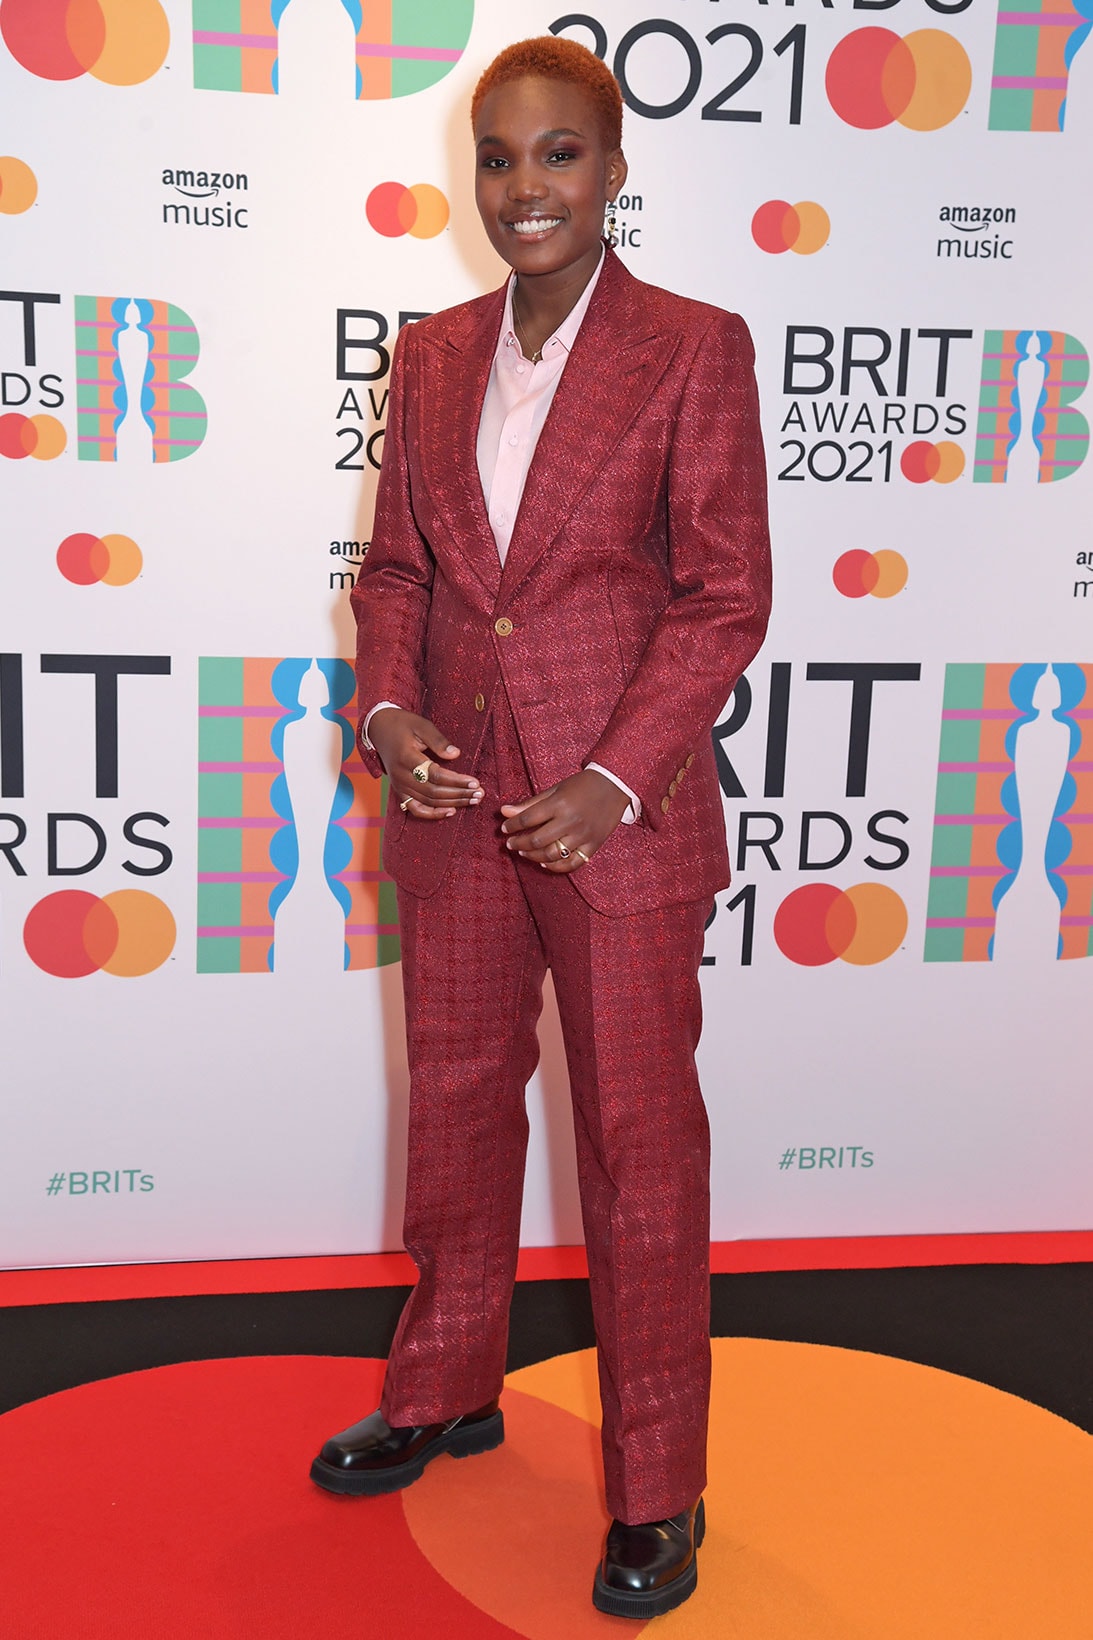 brit awards 2021 red carpet best dressed celebrities arlo parks gucci